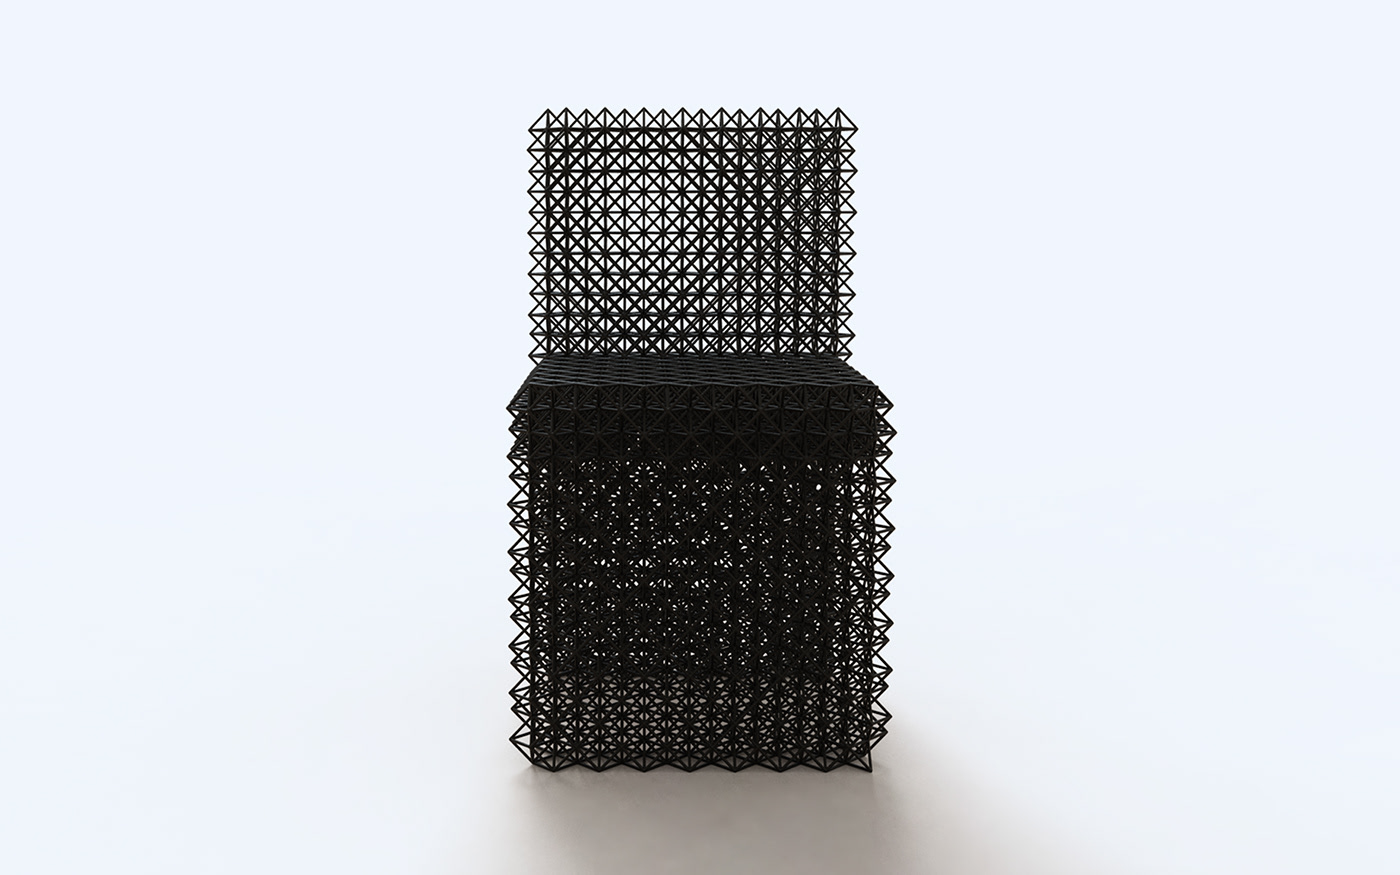 STAMPA 3D CHAIR plastic interior design  design107 lattice CELLA RETICOLATA parametric additive manufacturing wow